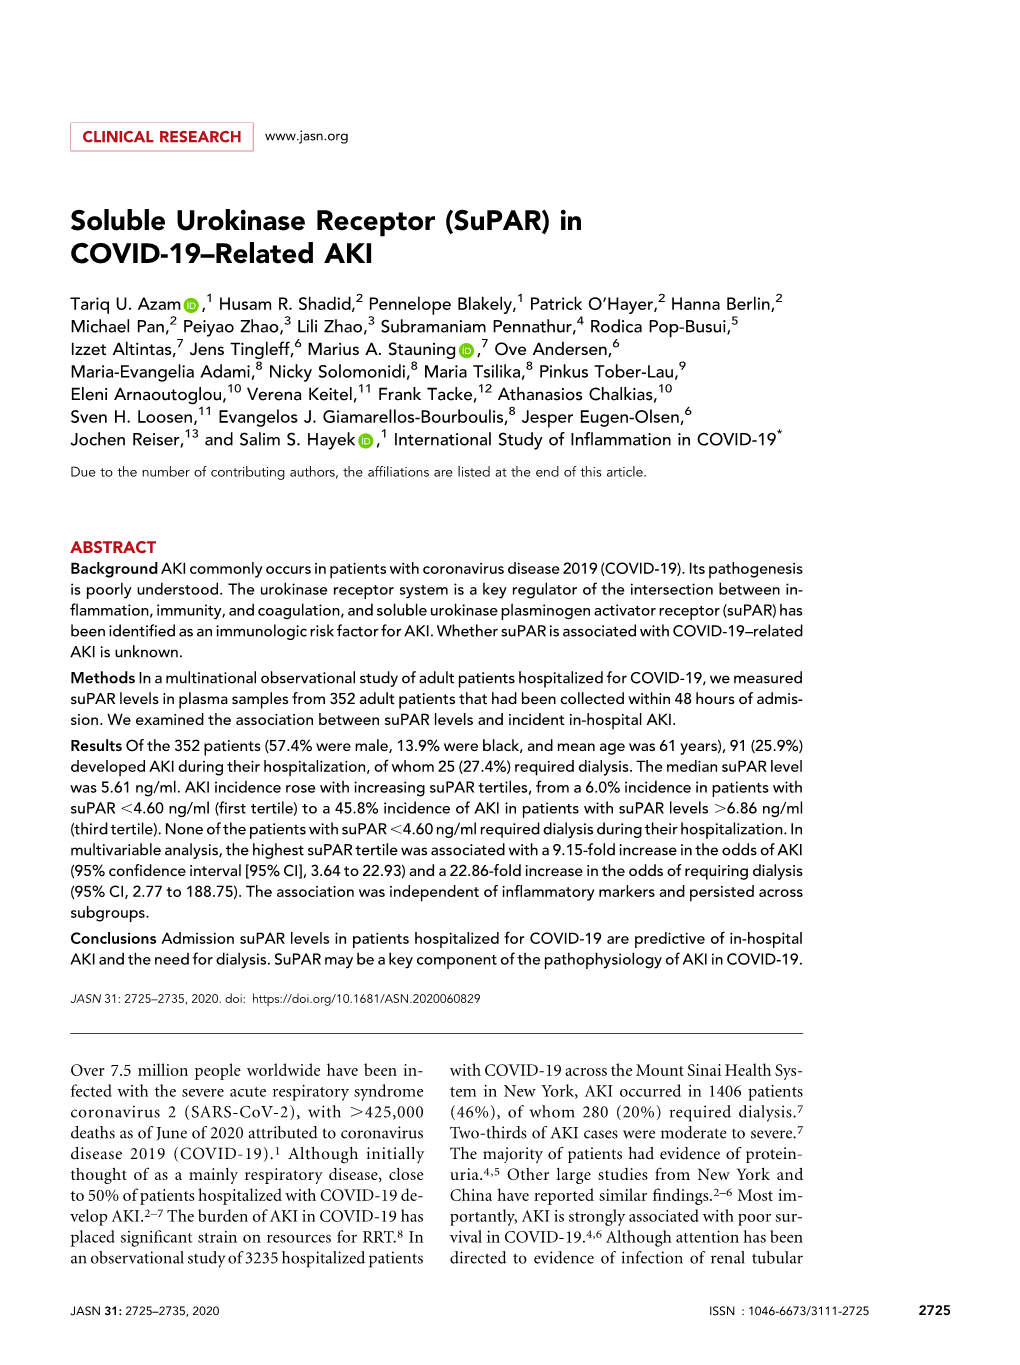 Soluble Urokinase Receptor (Supar) in COVID-19–Related AKI